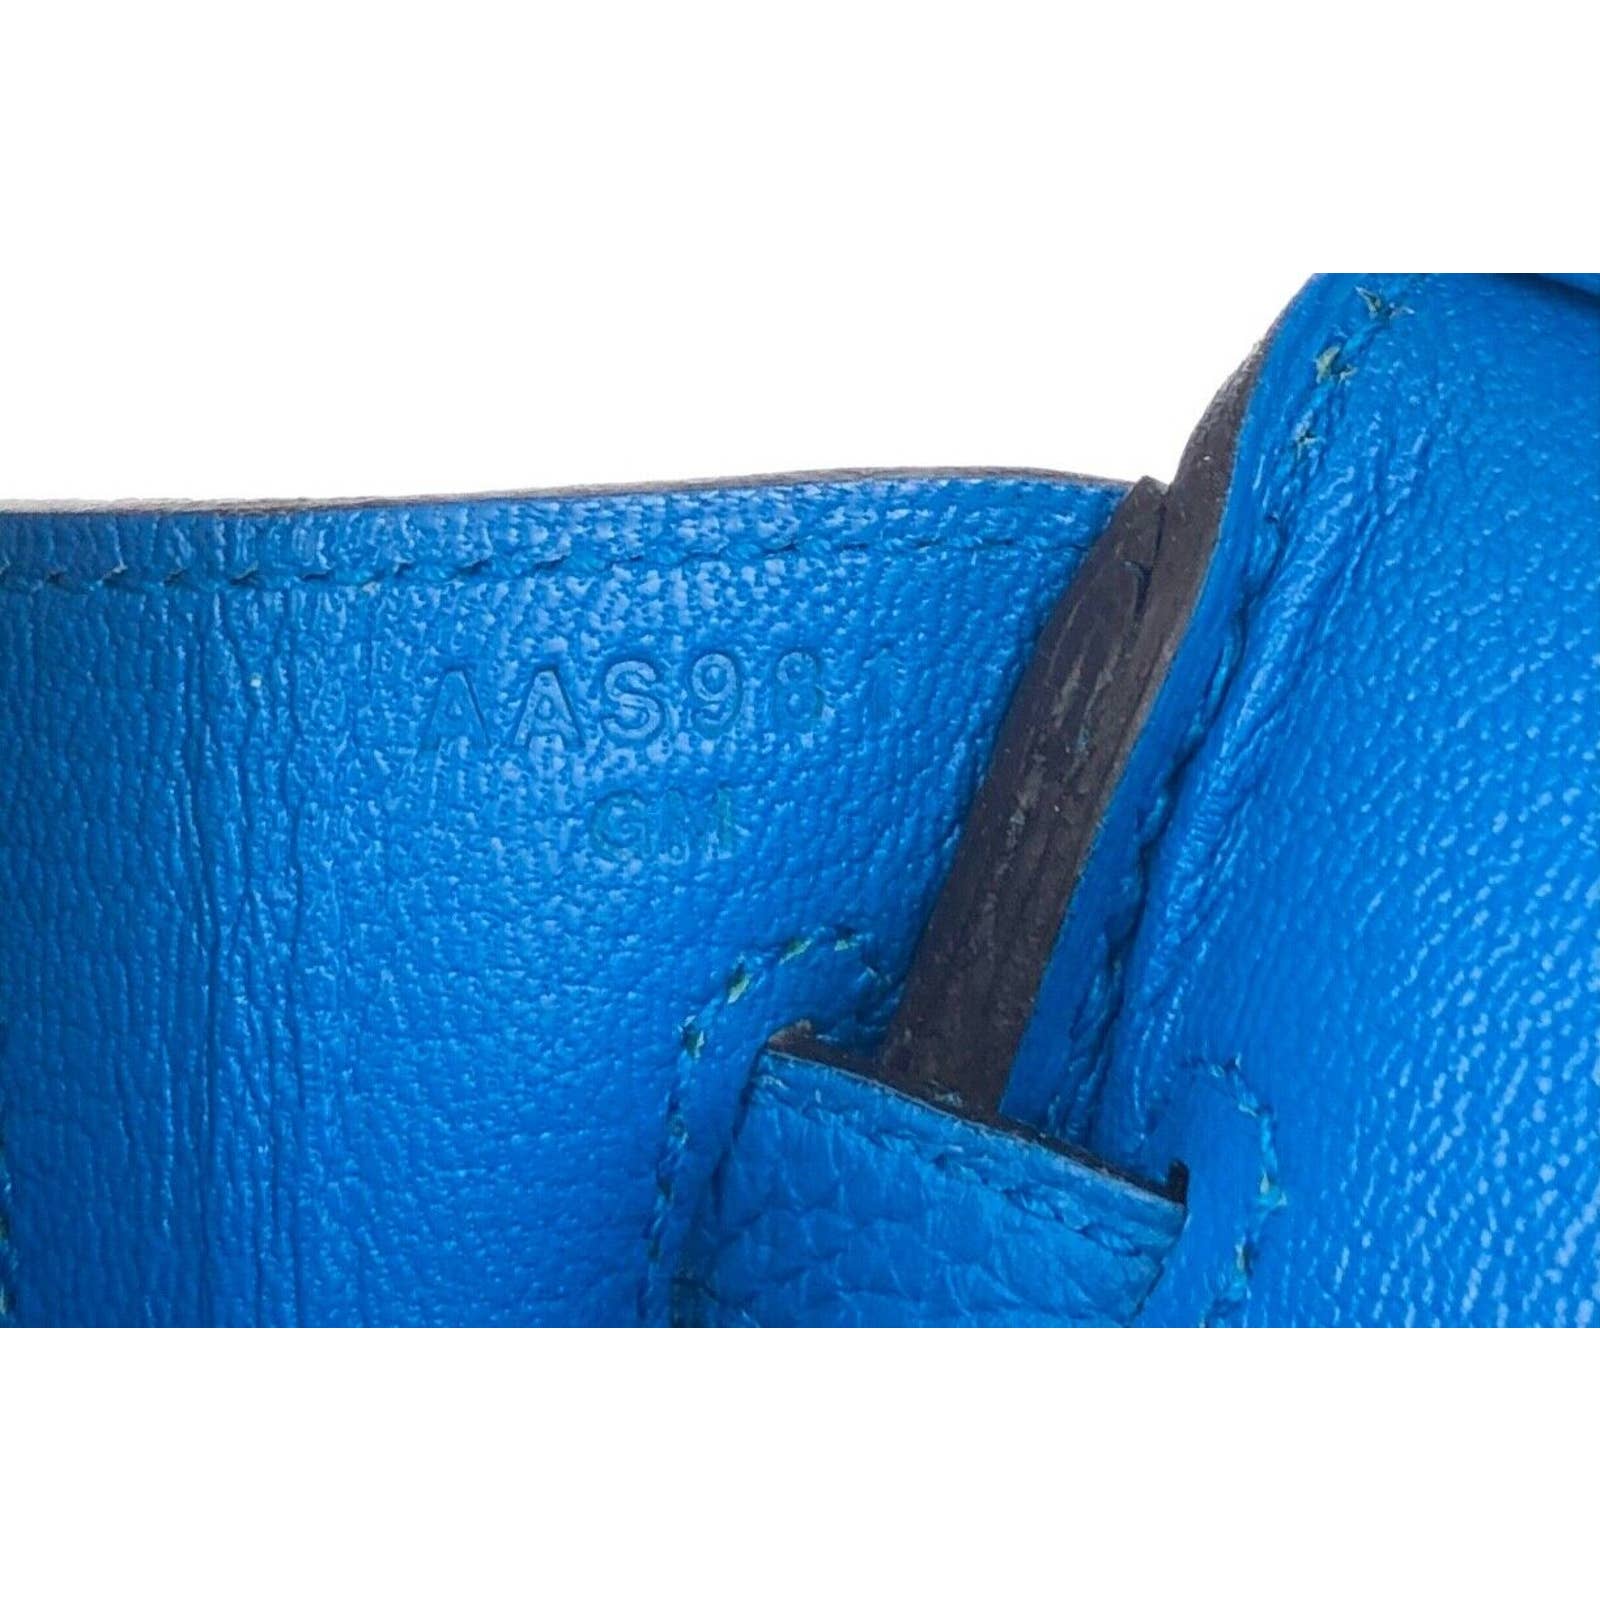 Hermes Birkin 25cm Blue Zanzibar Togo with Gold Hardware Handbag (LEZXZ) 144020004591 DO/DE